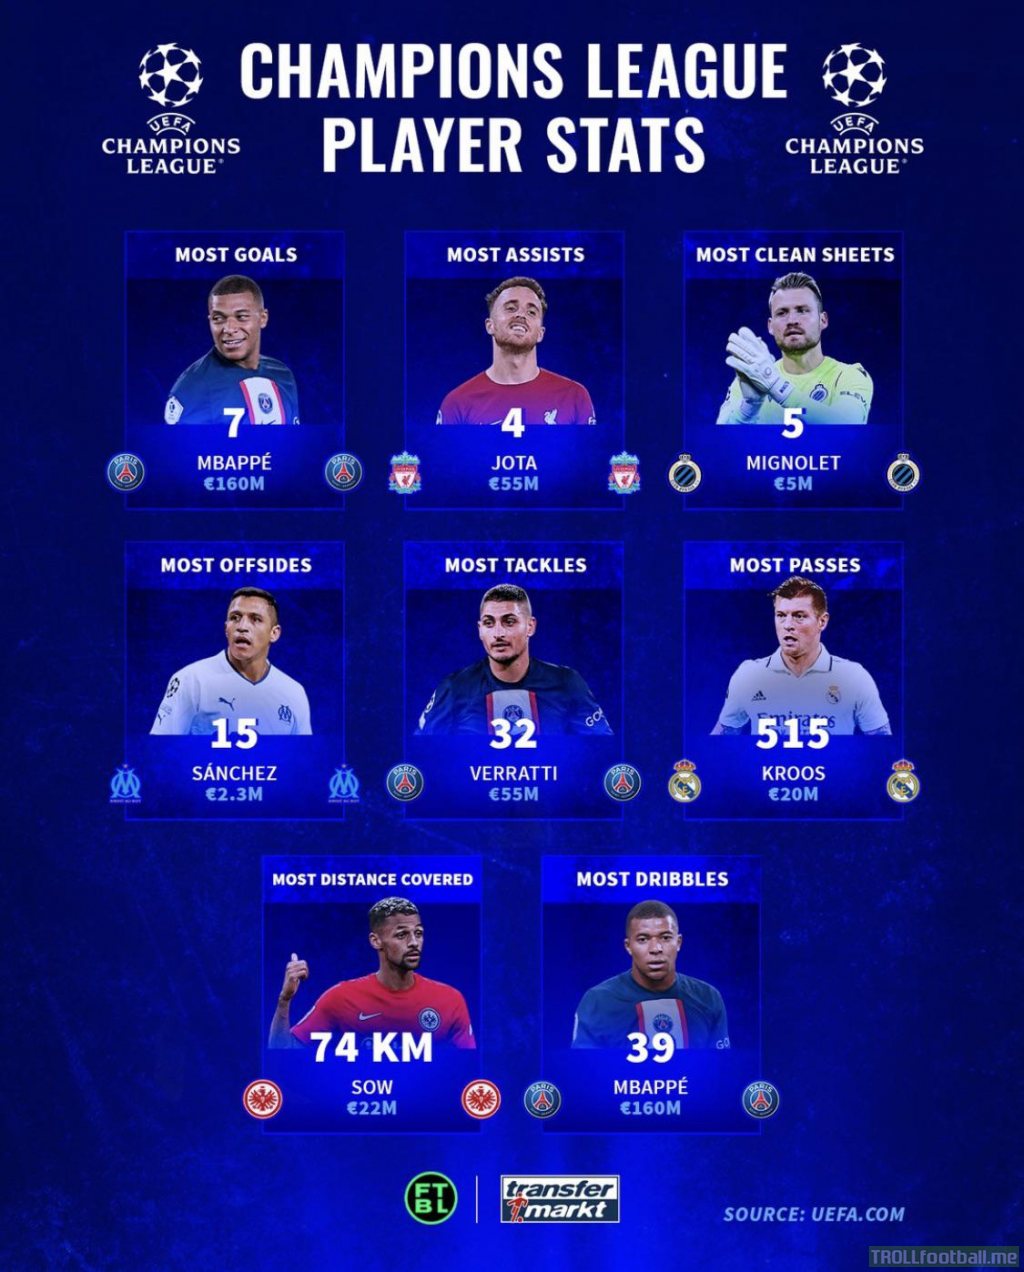 [Transfermarkt] Key Champions League player stats